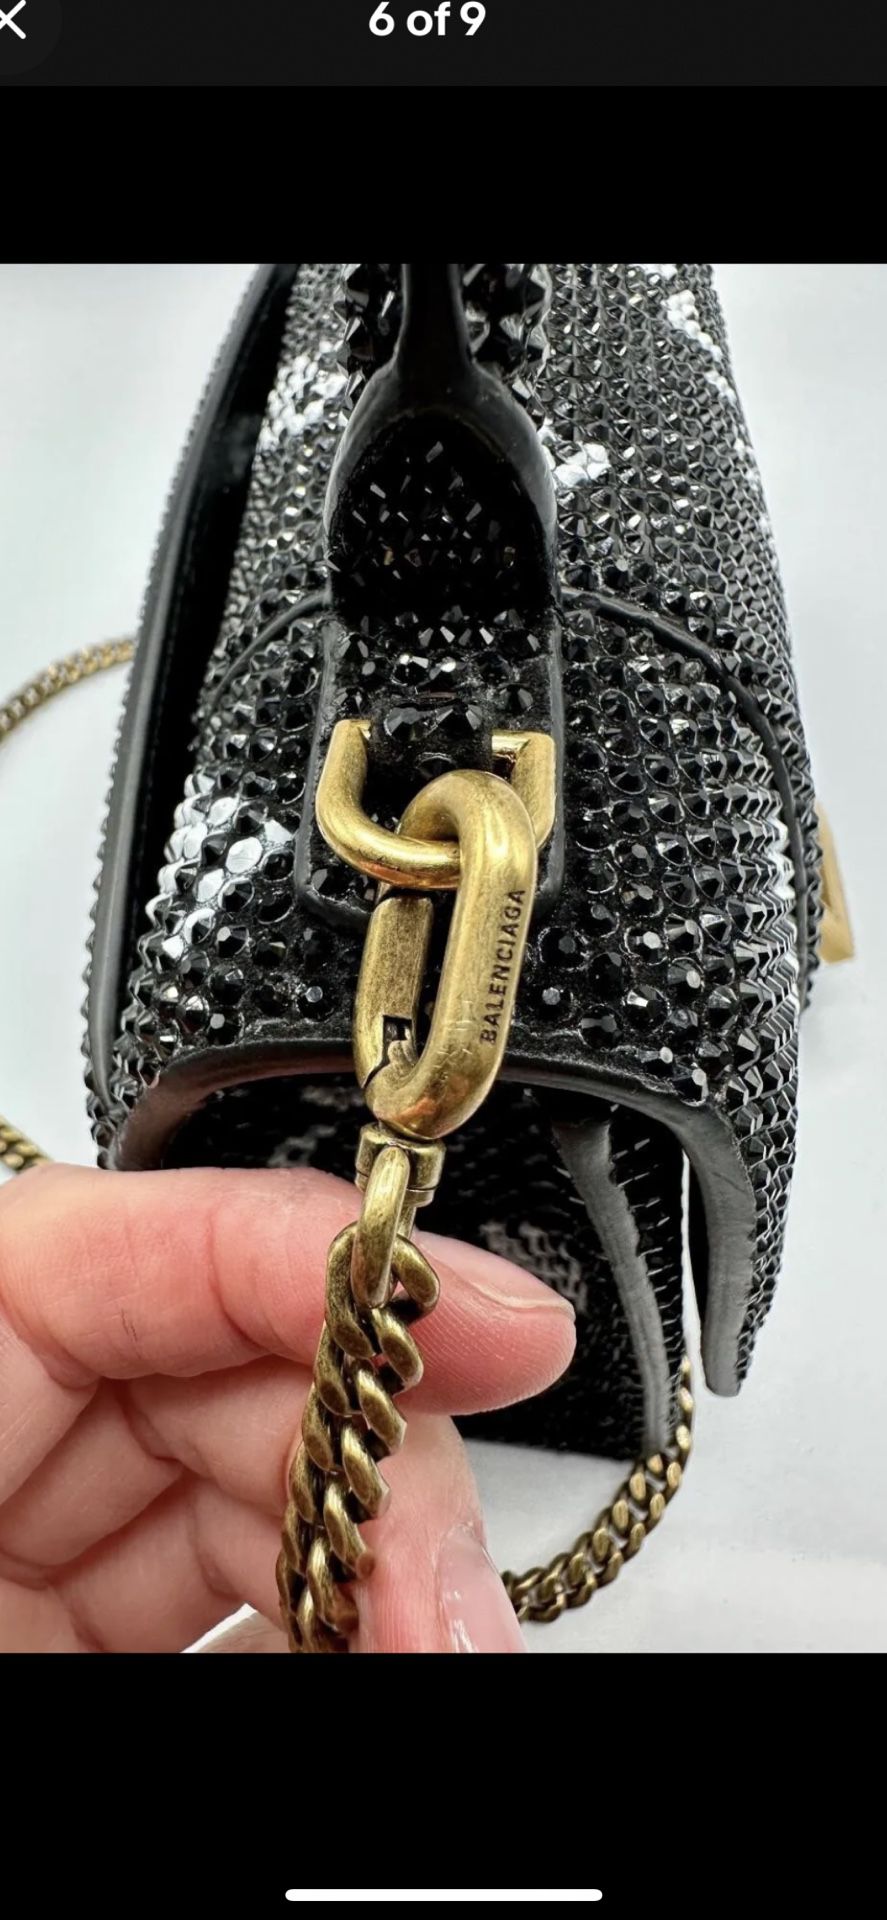 hourglass xs handbag with chain and allover logo rhinestones